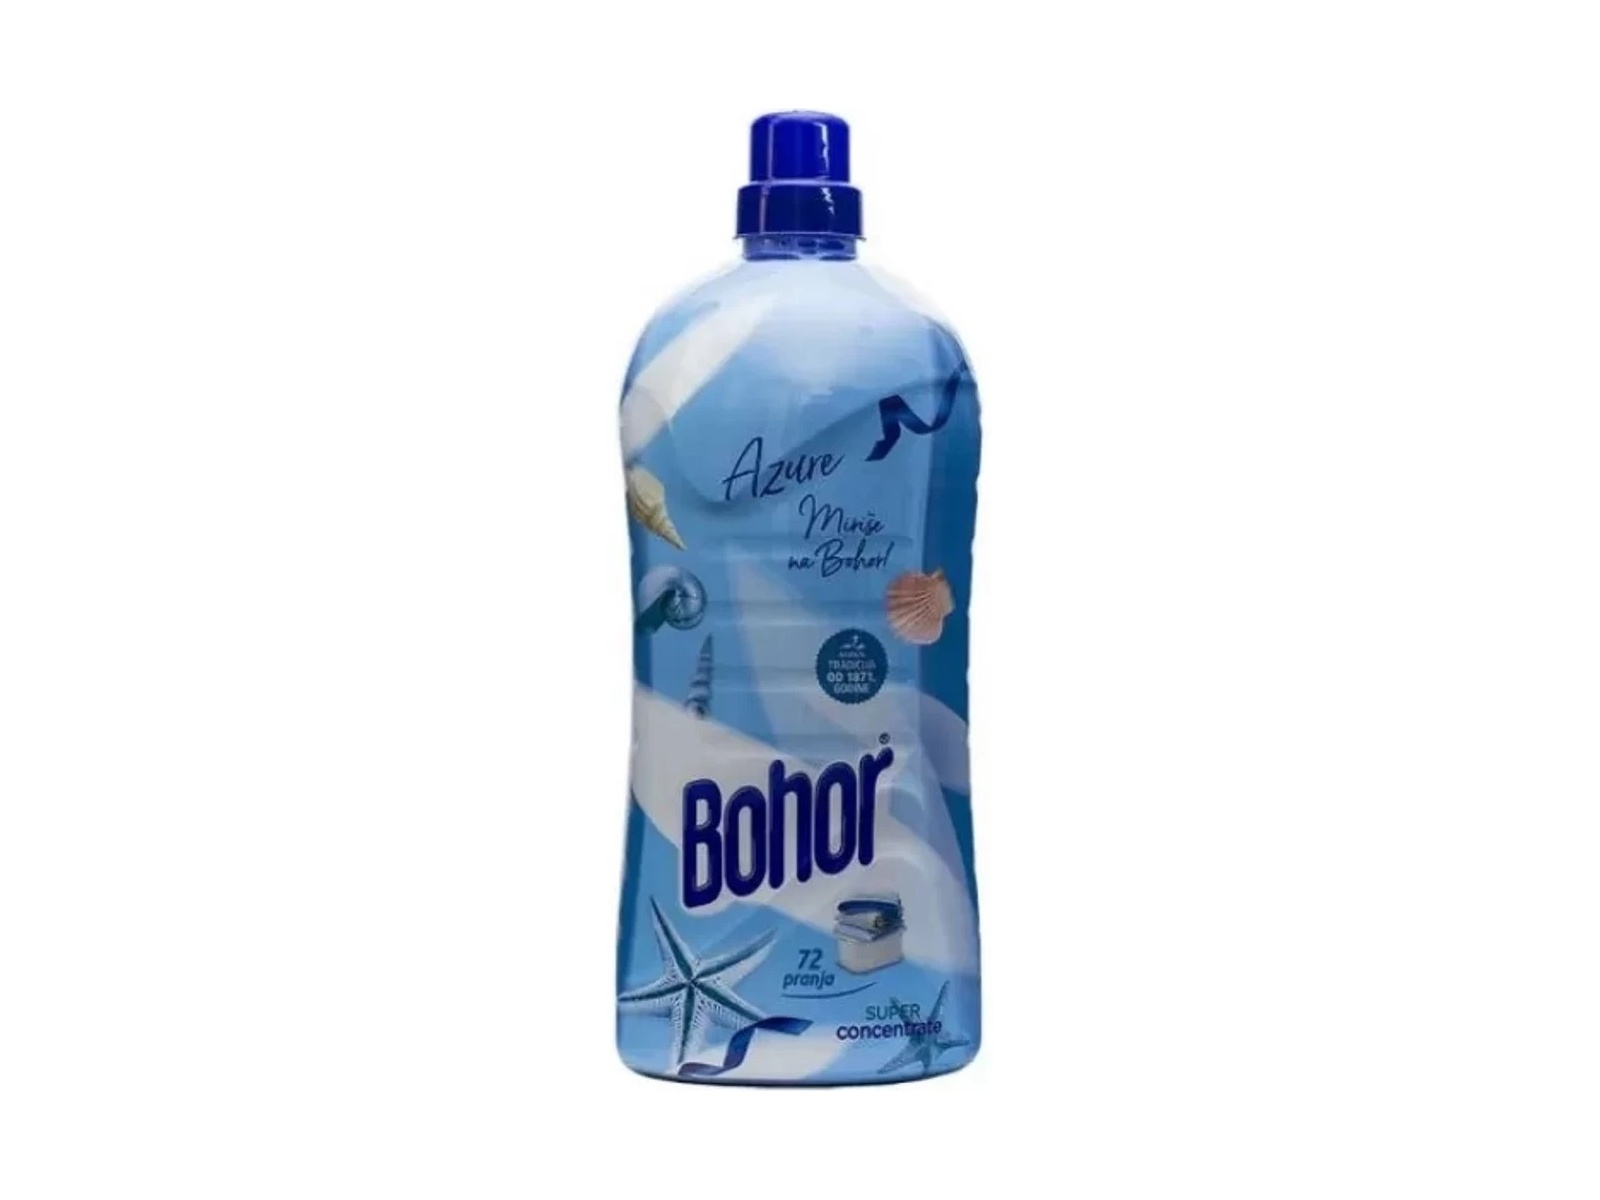 Bohor azure - Ammorbidente 1700ml